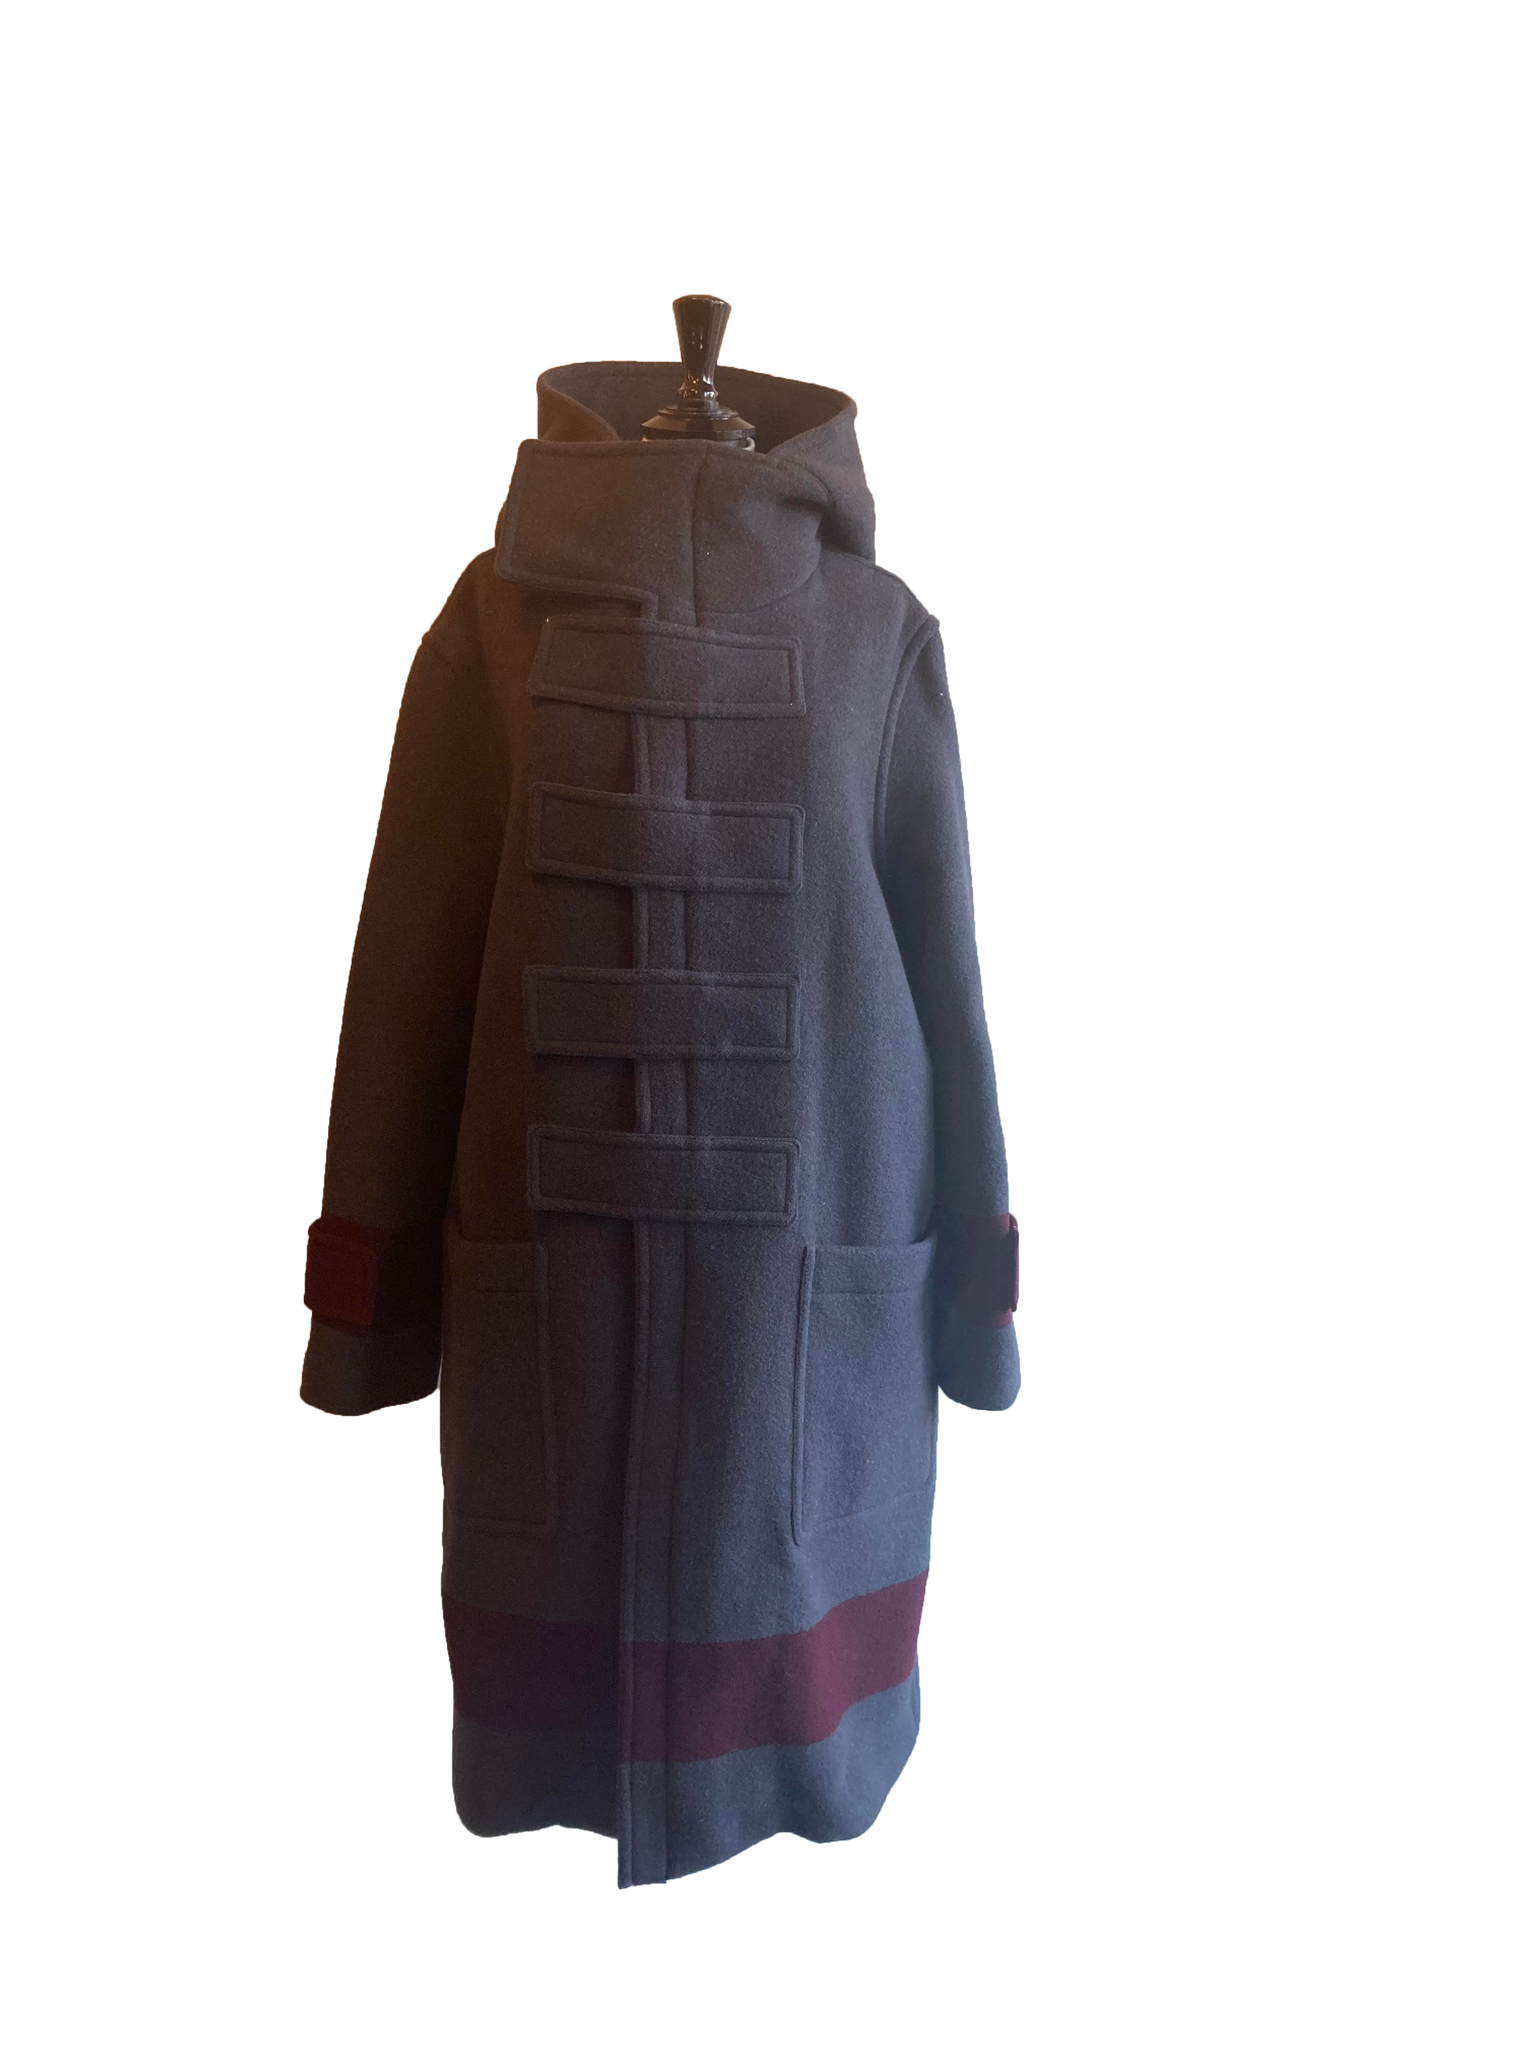 Gents Wool Duffle Style Coat